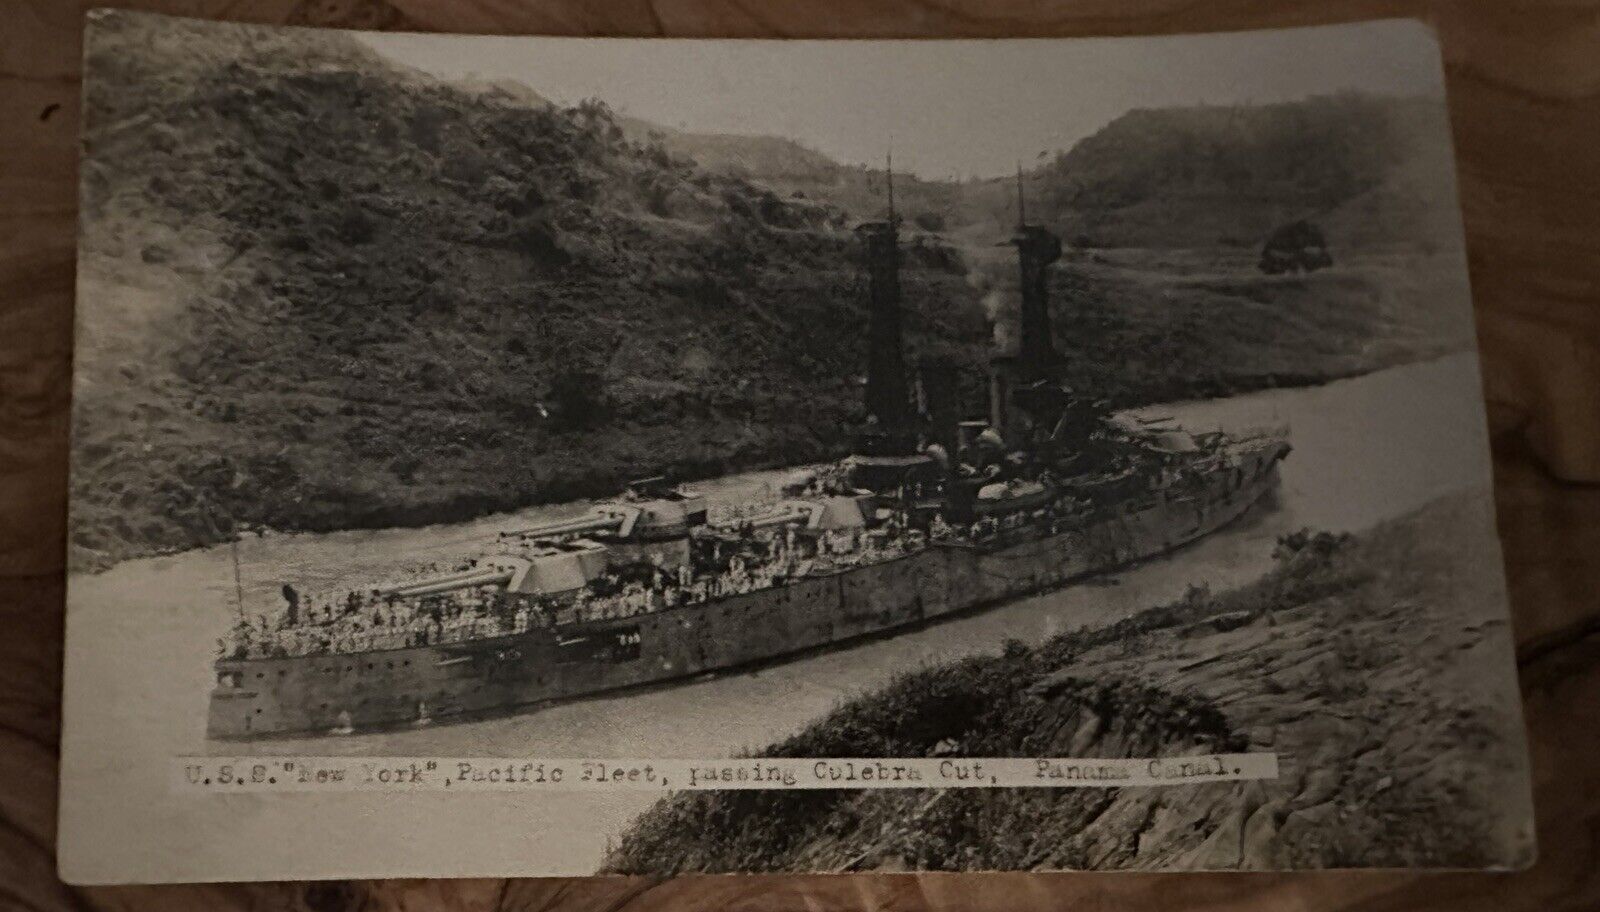 Antique Postcard U.S.S. “New York”, Pacific Fleet Passing Culebra Panama Canal